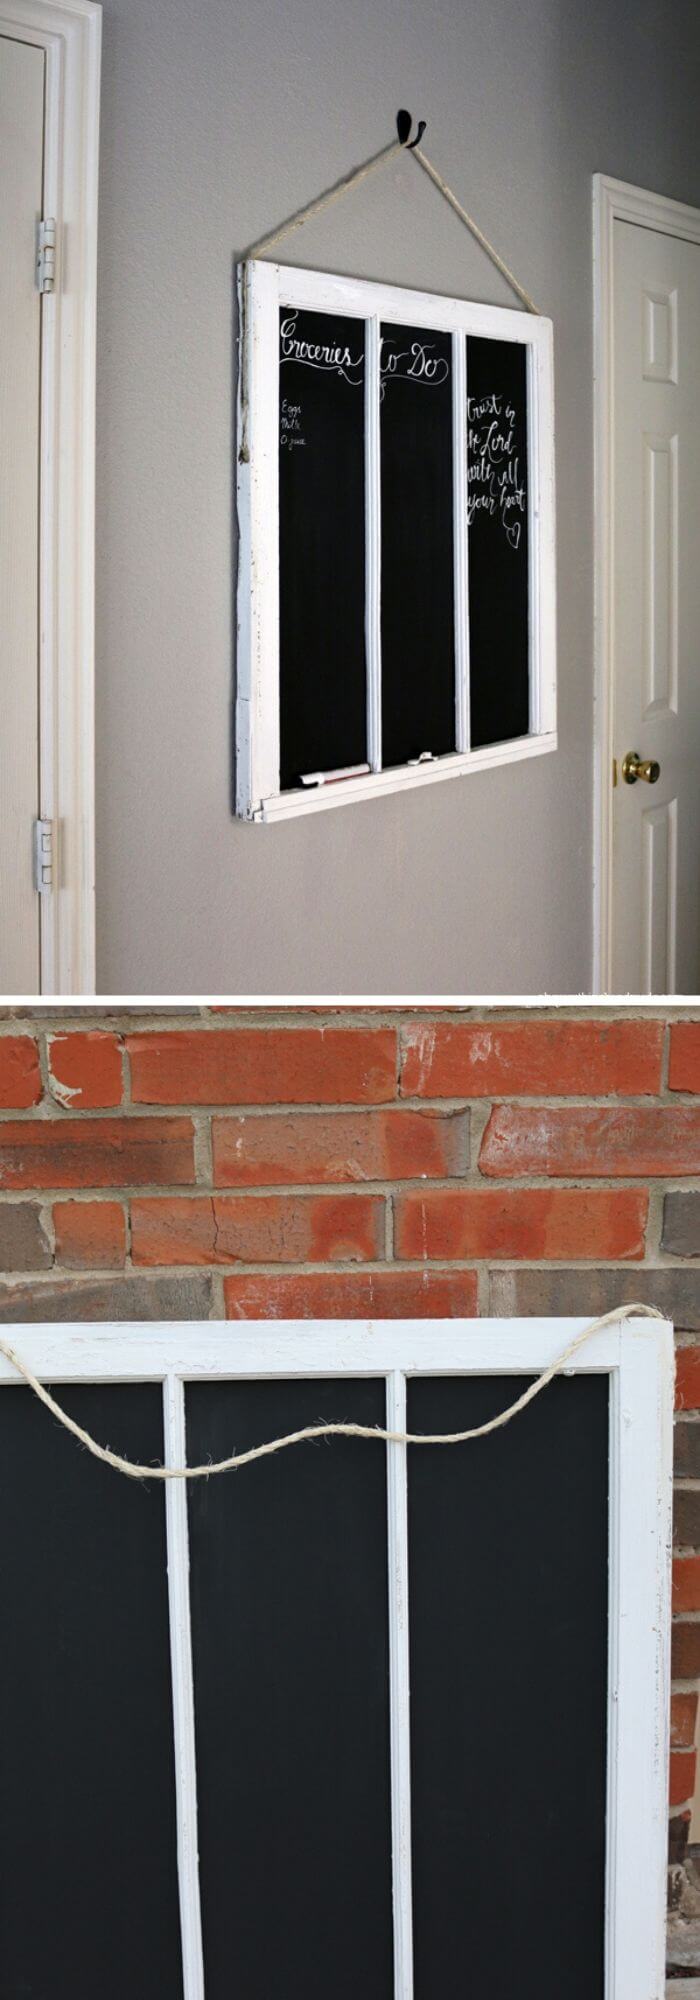 1 repurposed old window ideas